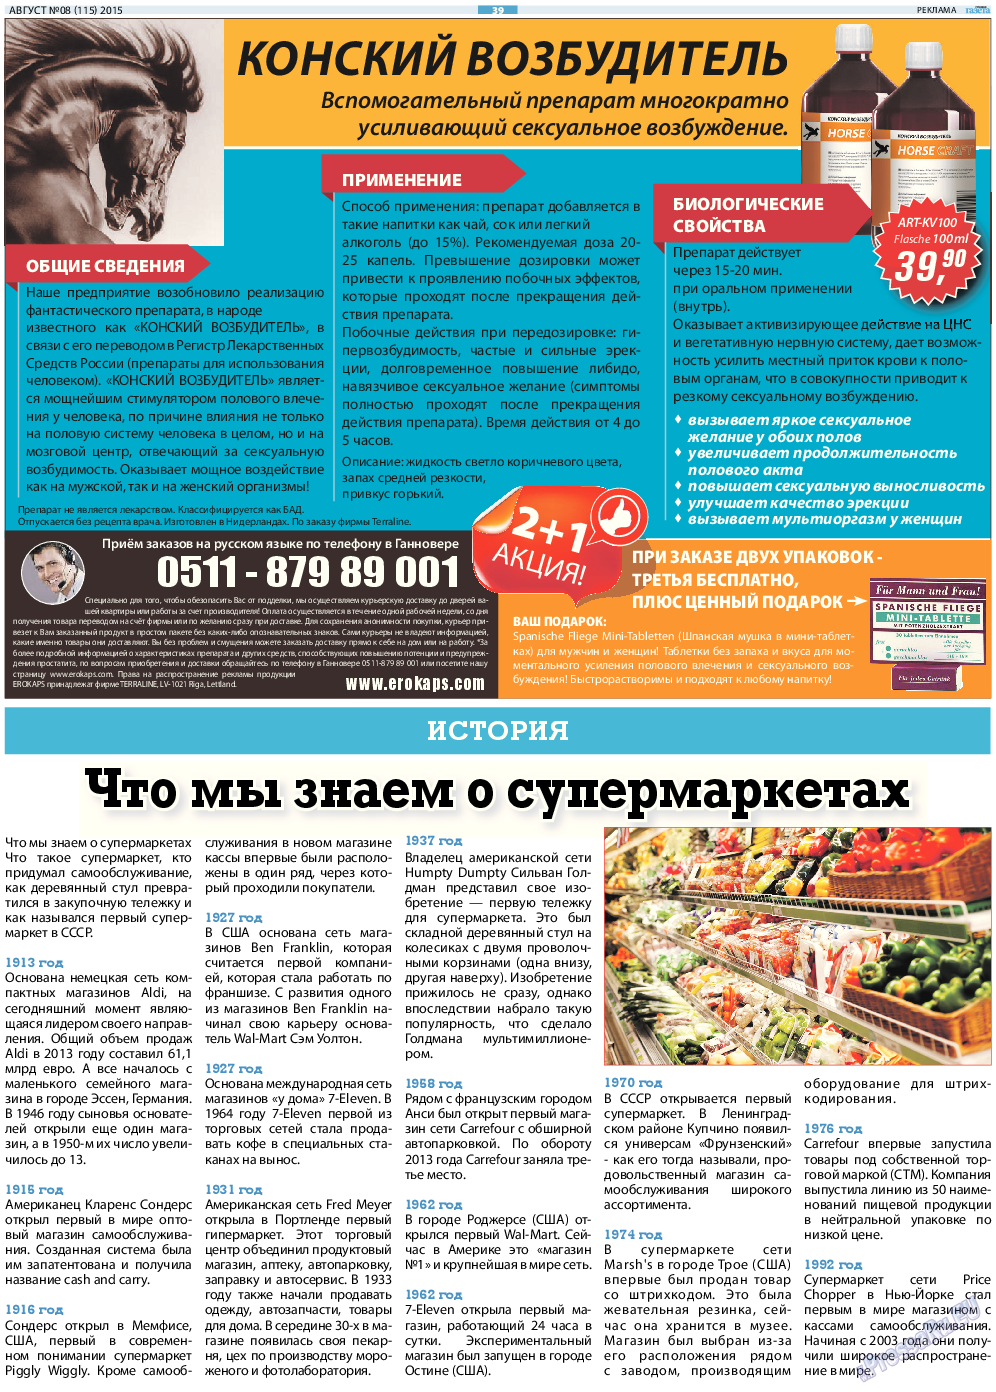 Русская Газета, газета. 2015 №8 стр.39